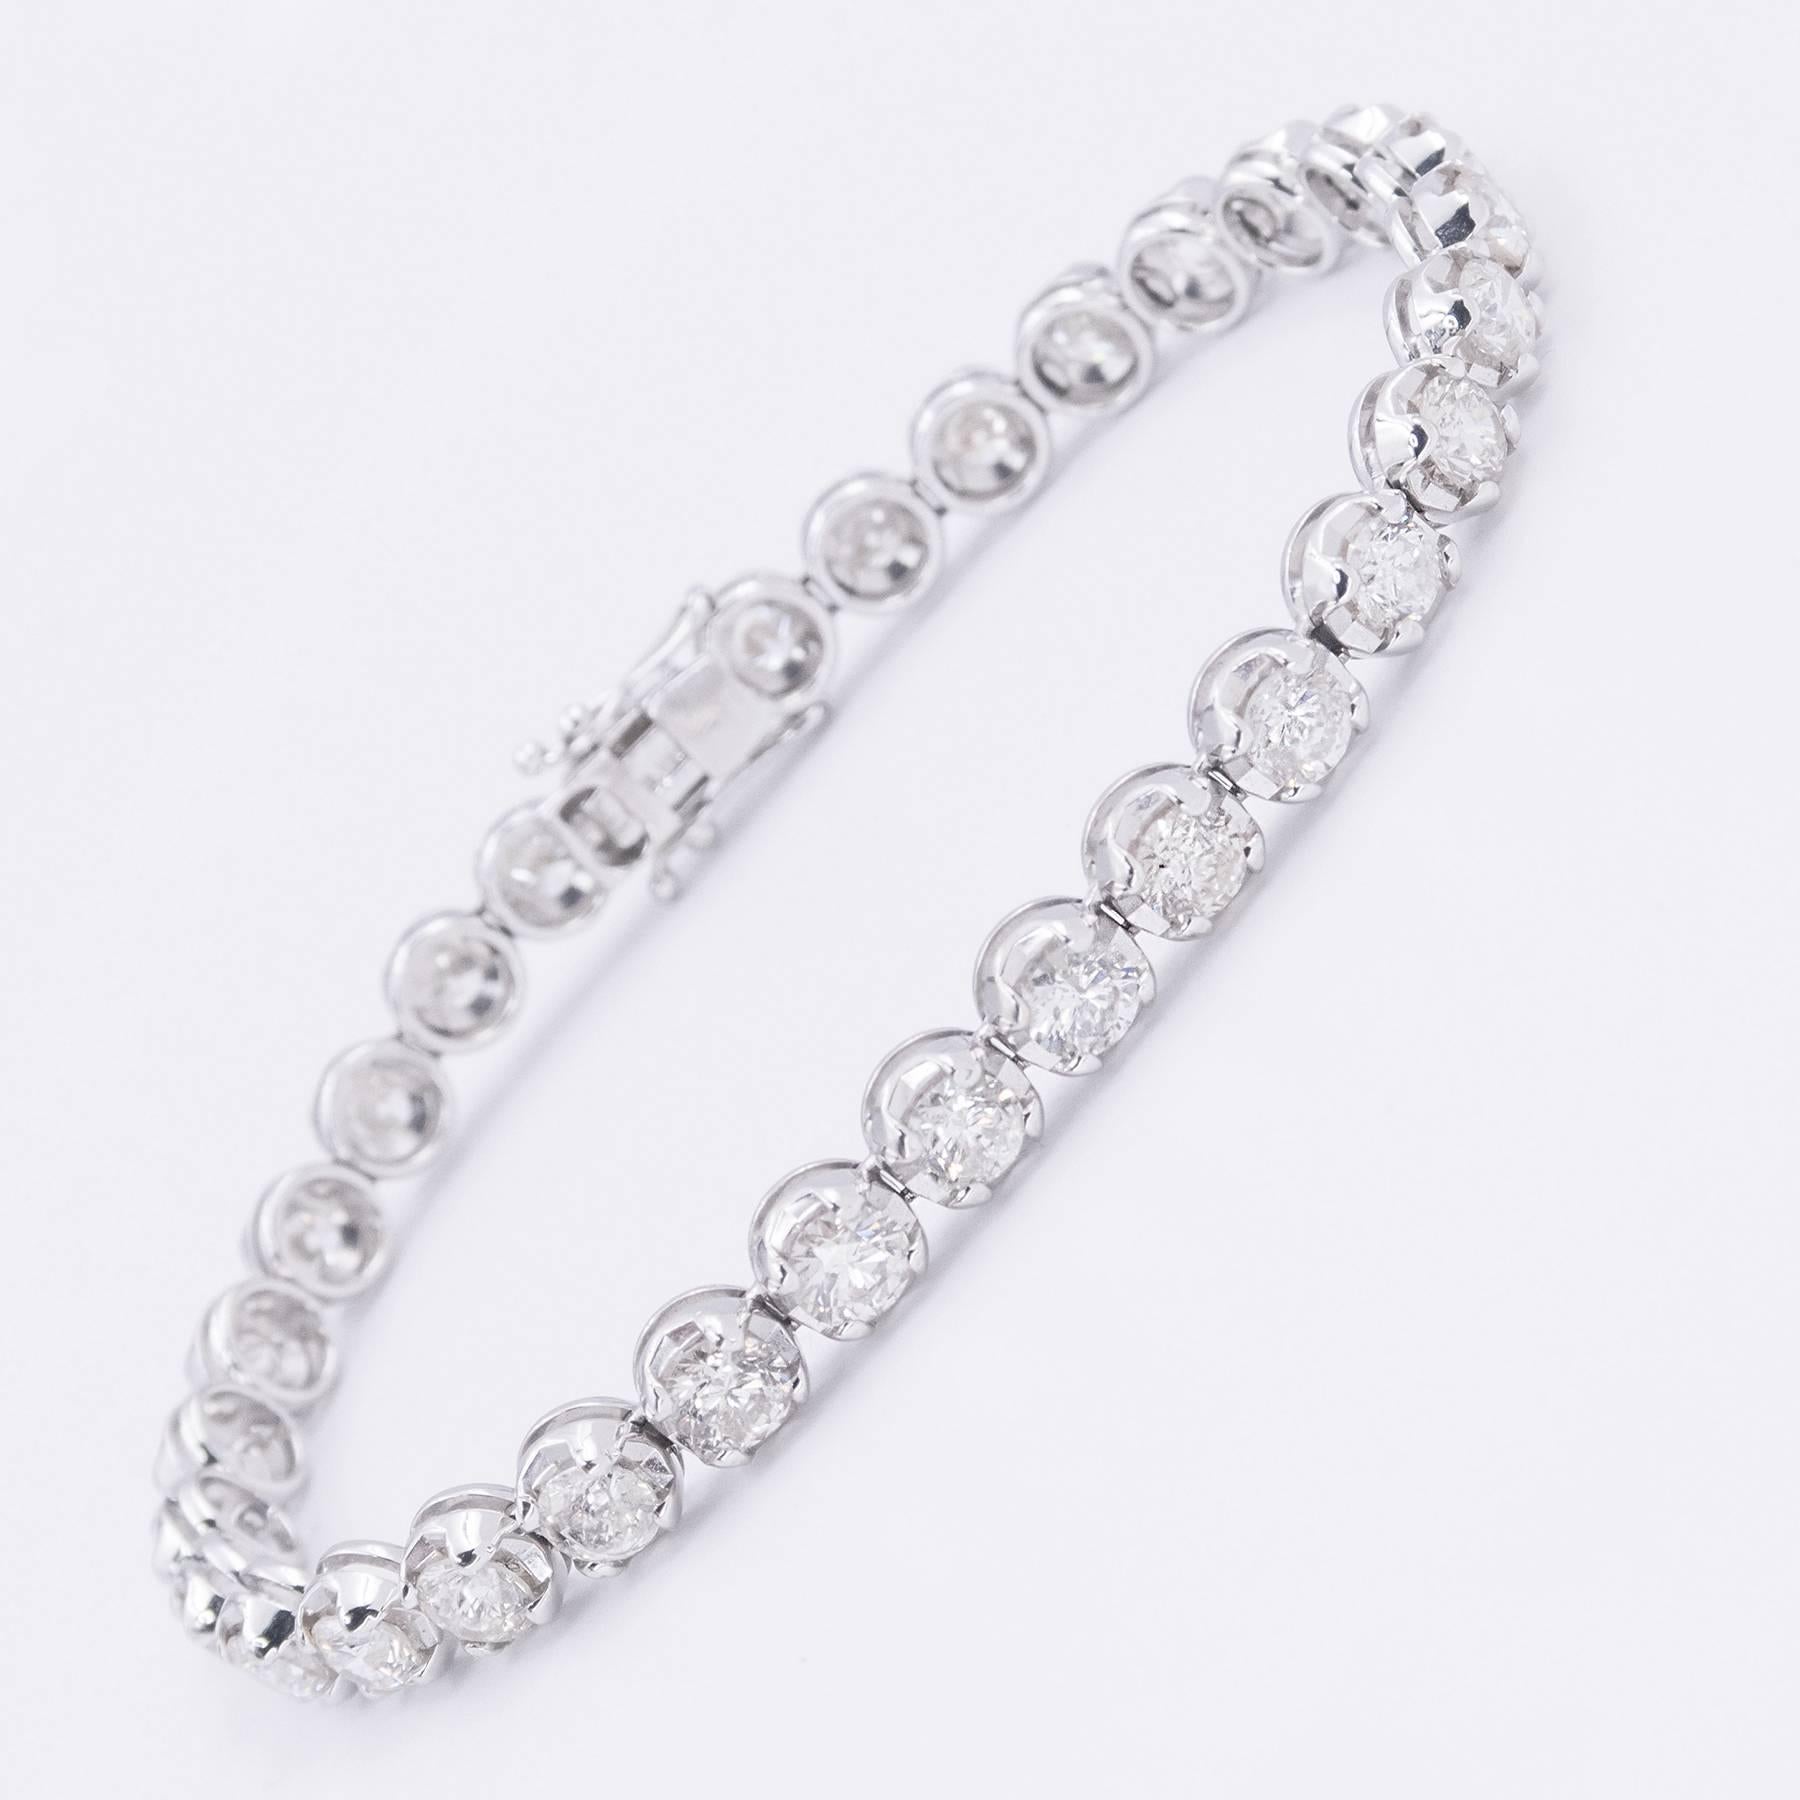 Fabulous 10.26 Carat Diamond Tennis Bracelet Set in 18 Karat White Gold For Sale 1